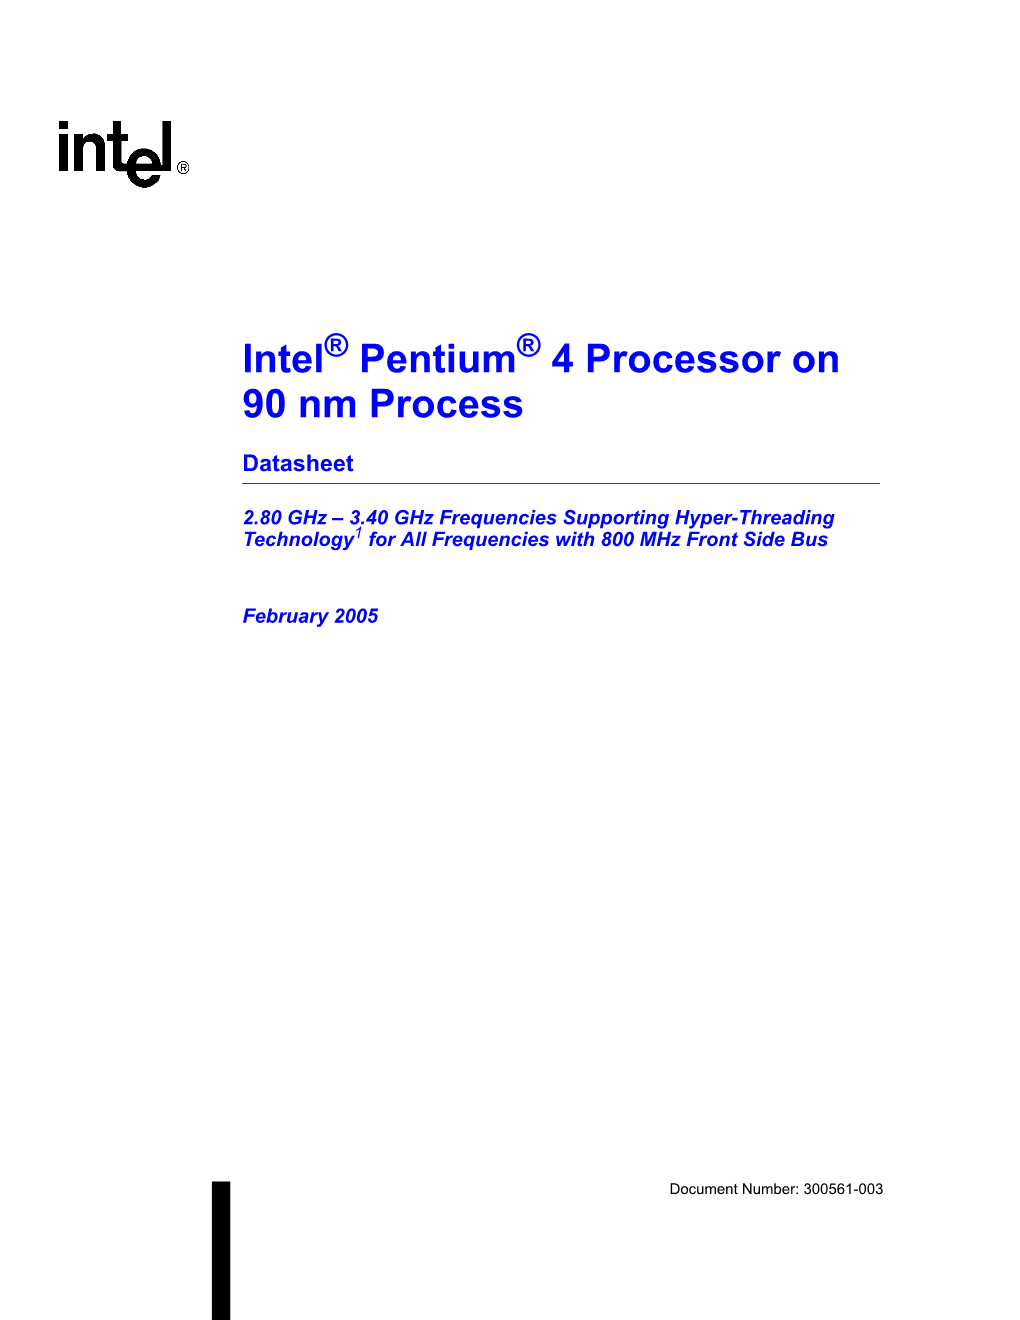 Intel(R) Pentium(R) 4 Processor on 90 Nm Process Datasheet